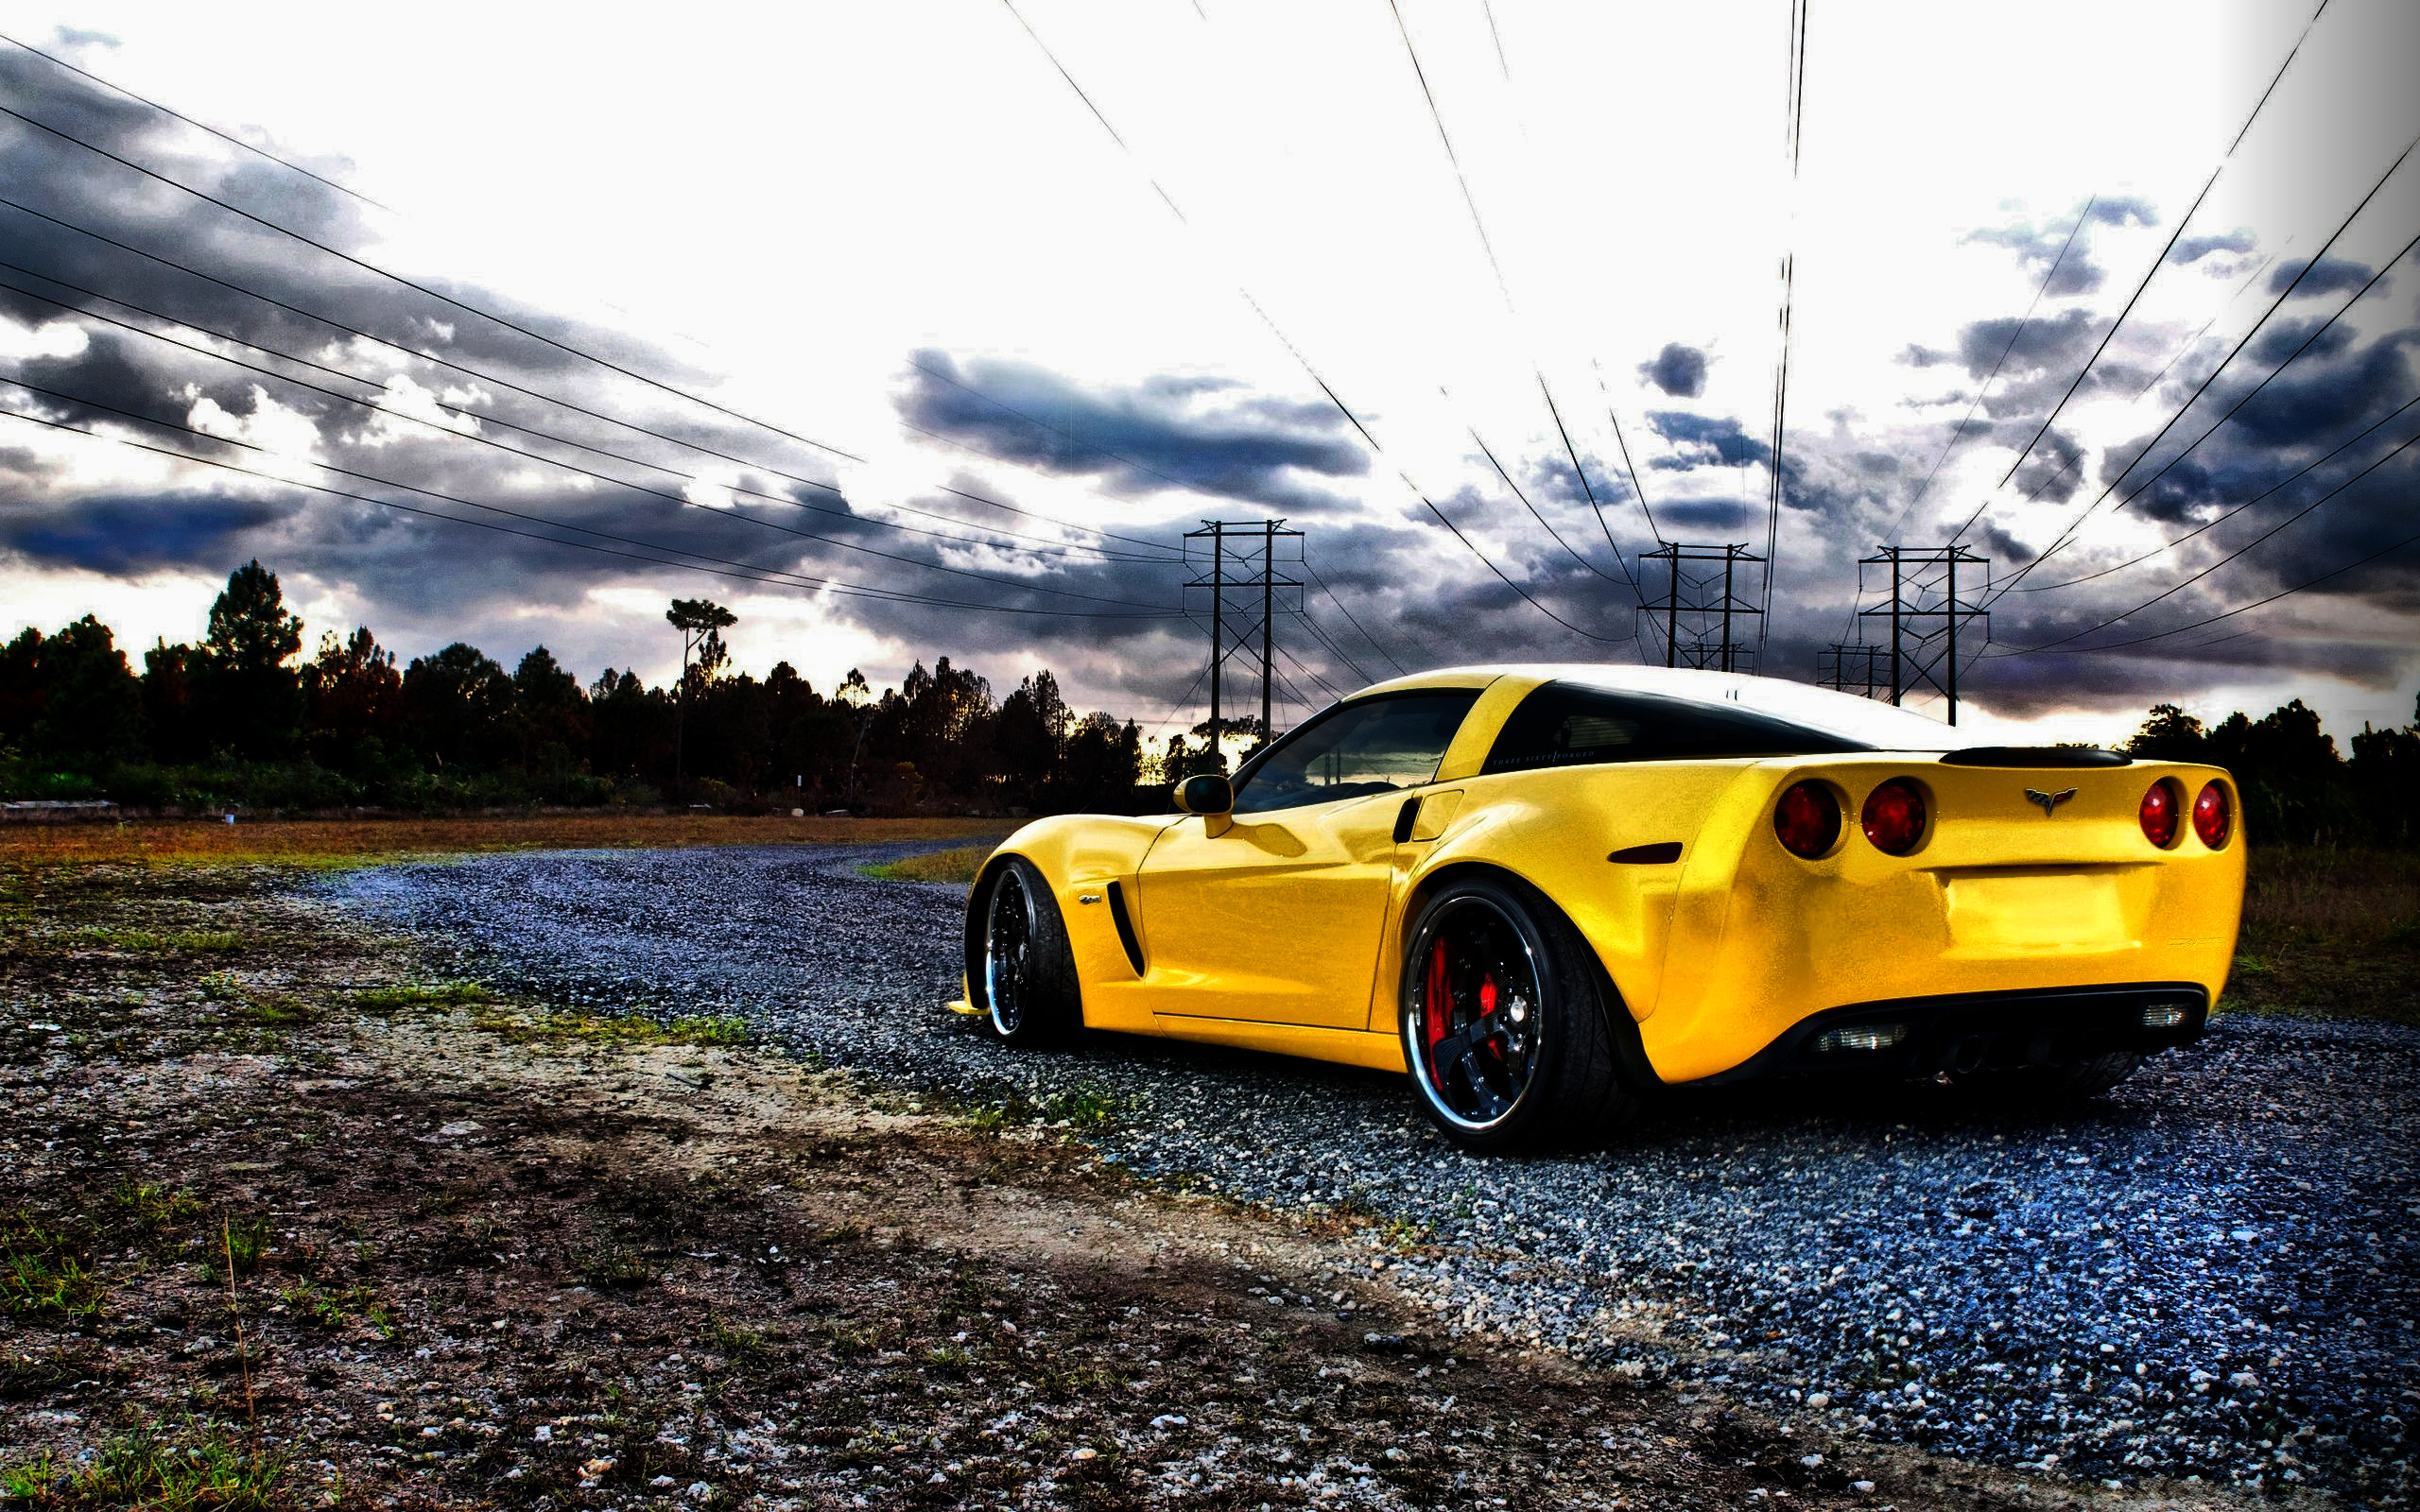 Corvette z06, желтое авто, колеса, фары, небо, дорога, дорогое авто, качественное фото, Corvette z06, yellow cars, wheels, lights, sky, road, expensive cars, high-quality photos